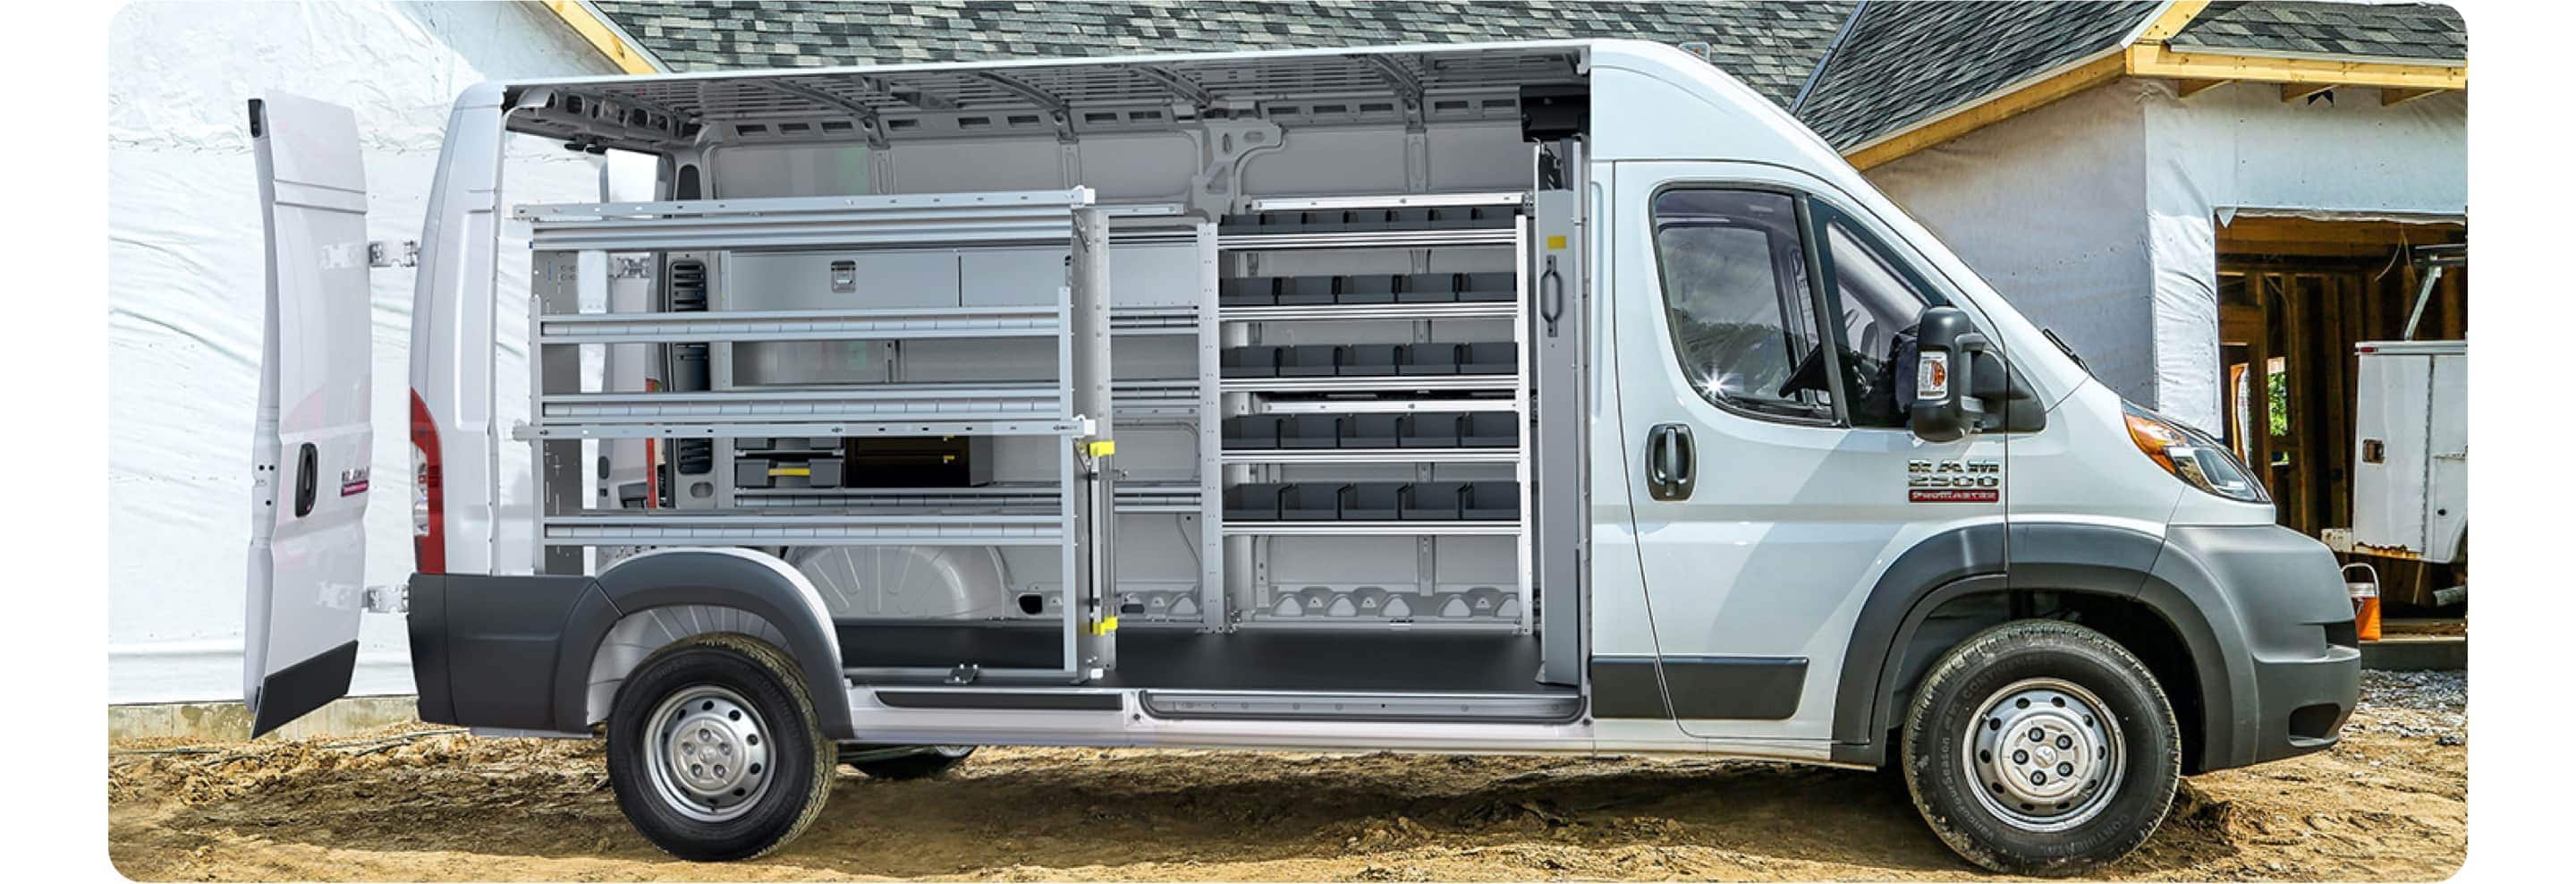 2021 Ram Promaster Cargo Dimensions, Shelves For Cargo Vans